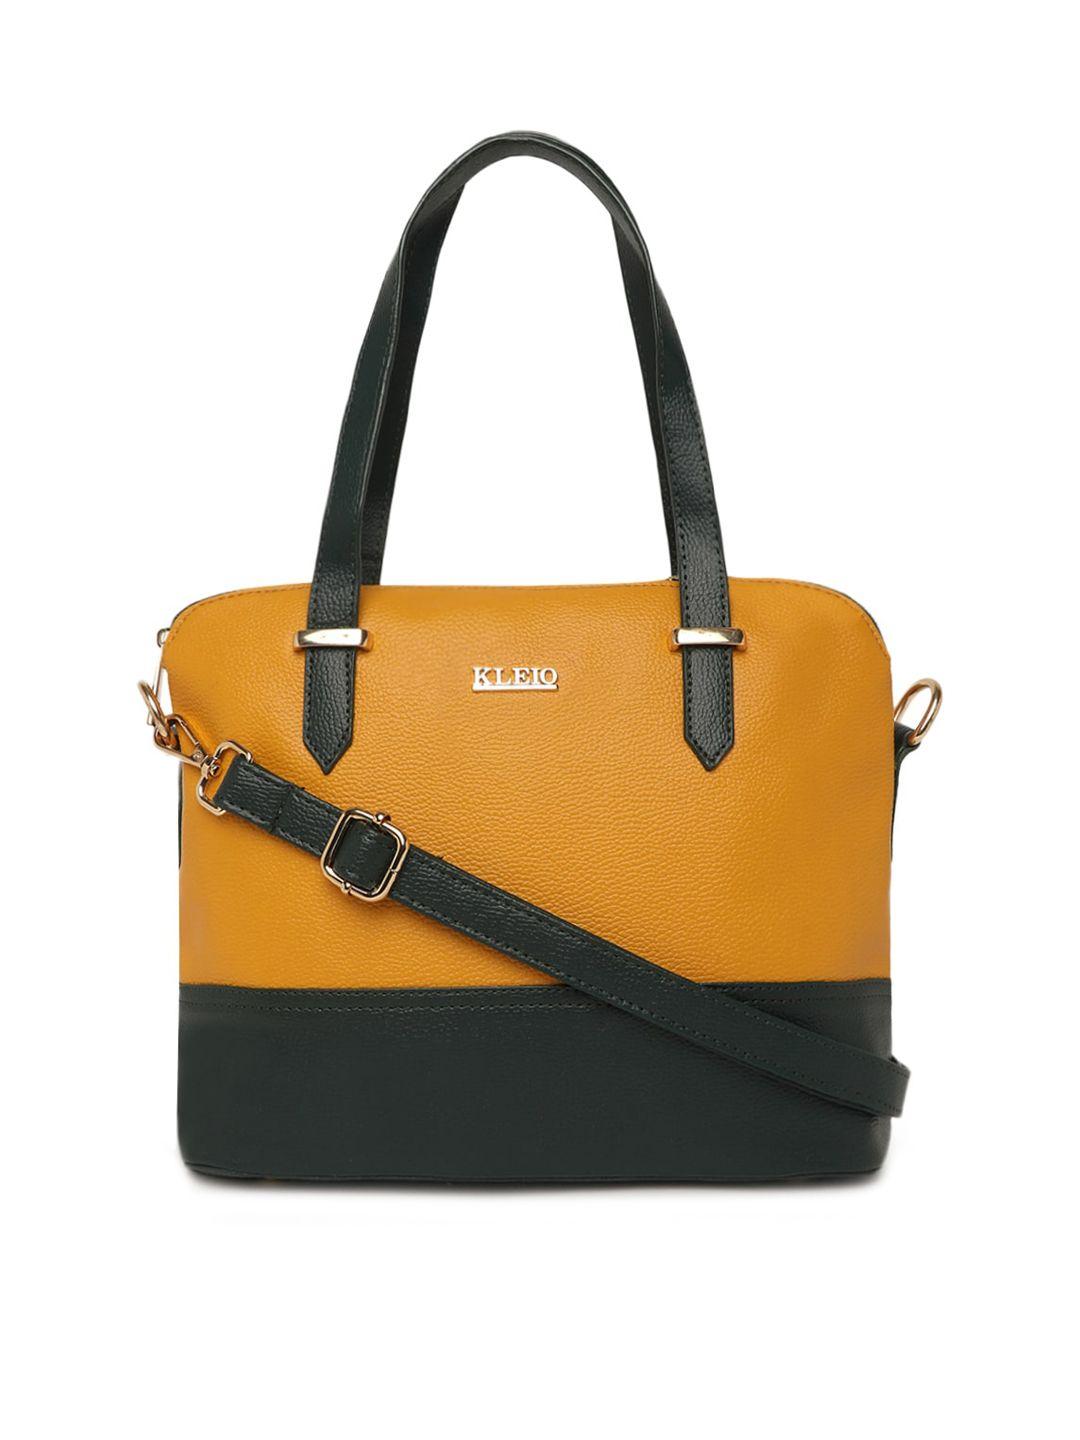 kleio colorblocked structured handbag